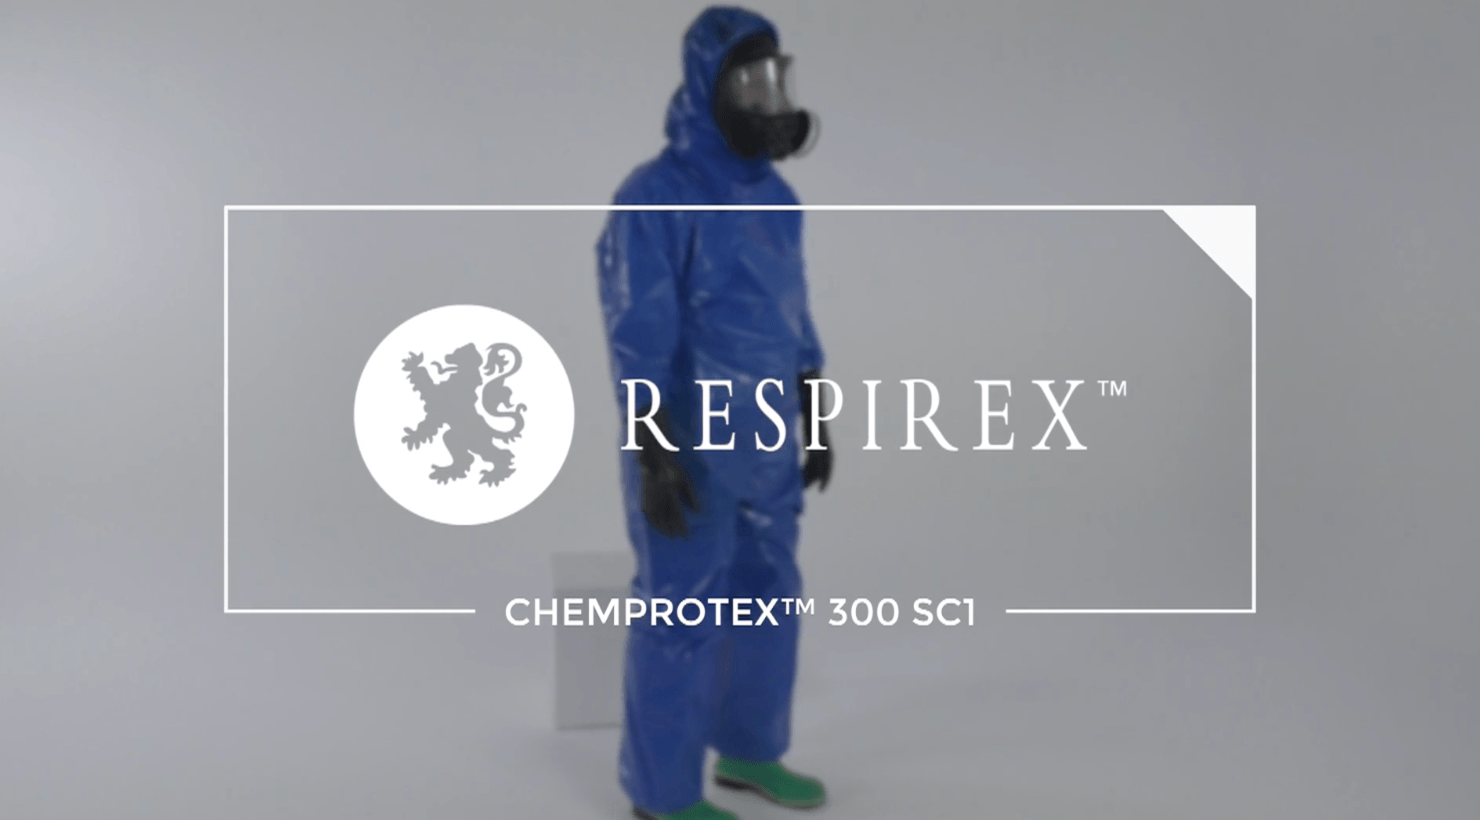 Limited Life SC1 Splash Suit from Respirex International